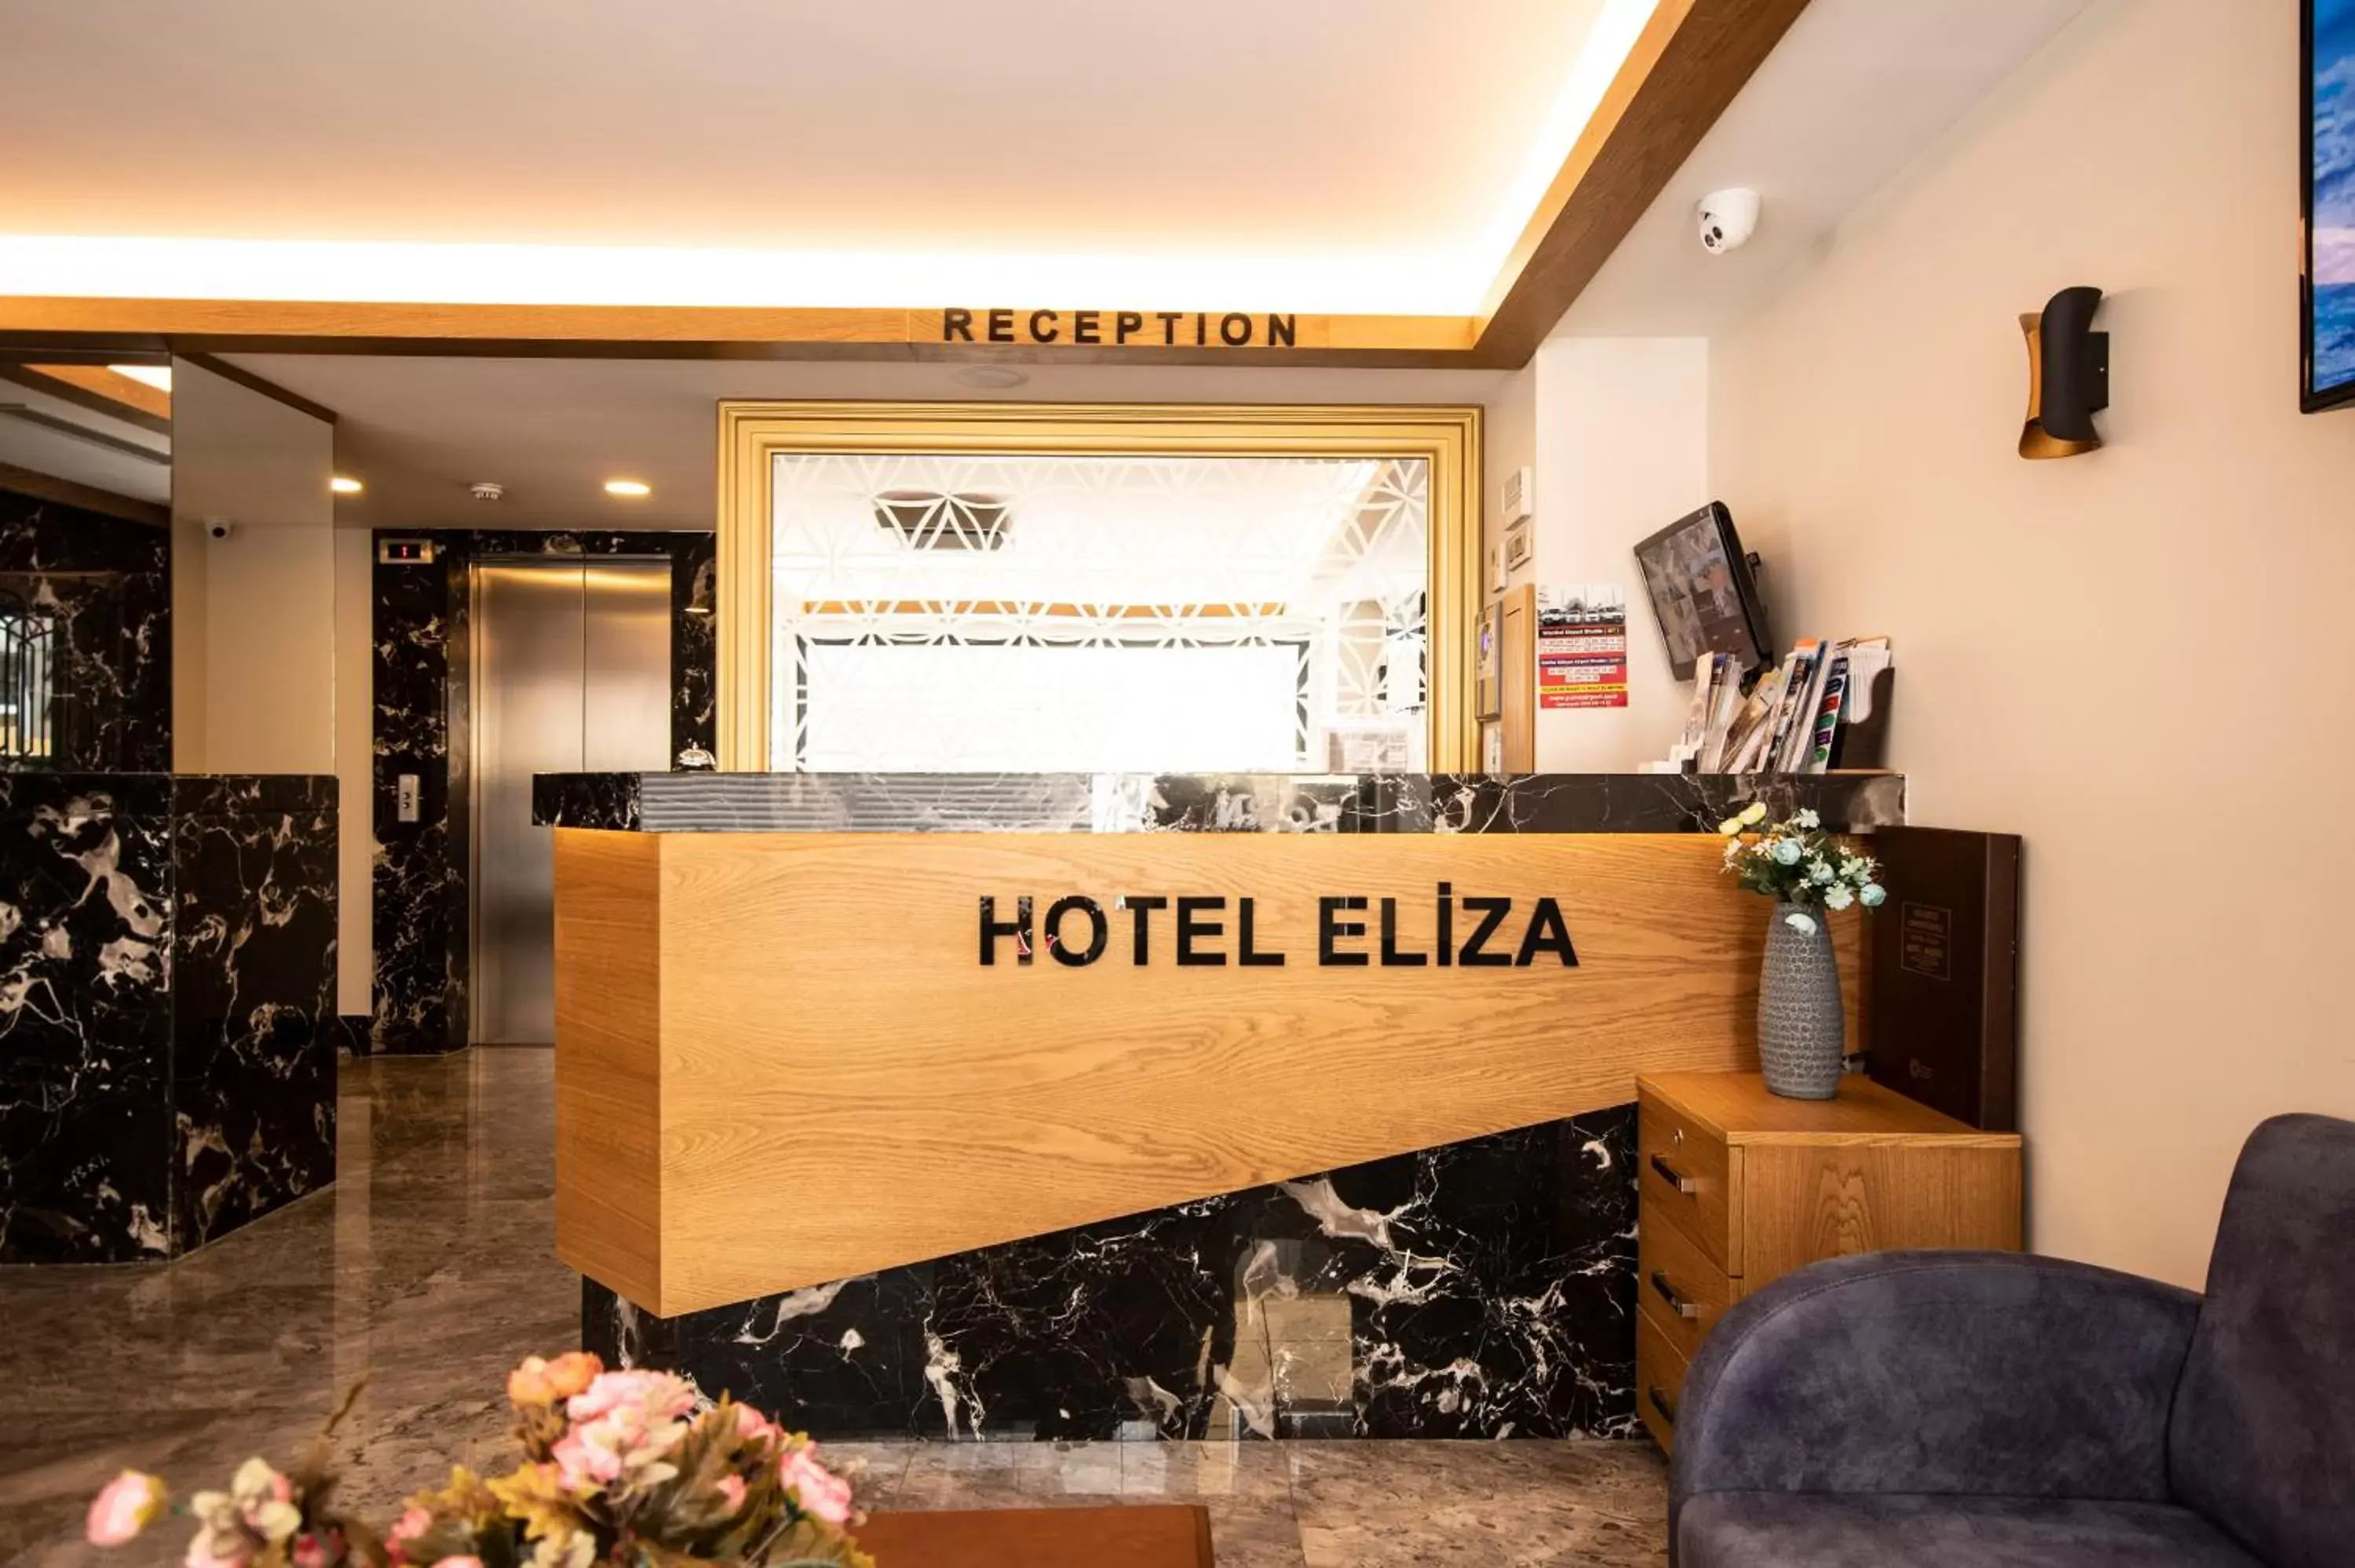 Property logo or sign, Lobby/Reception in Eliza Hotel